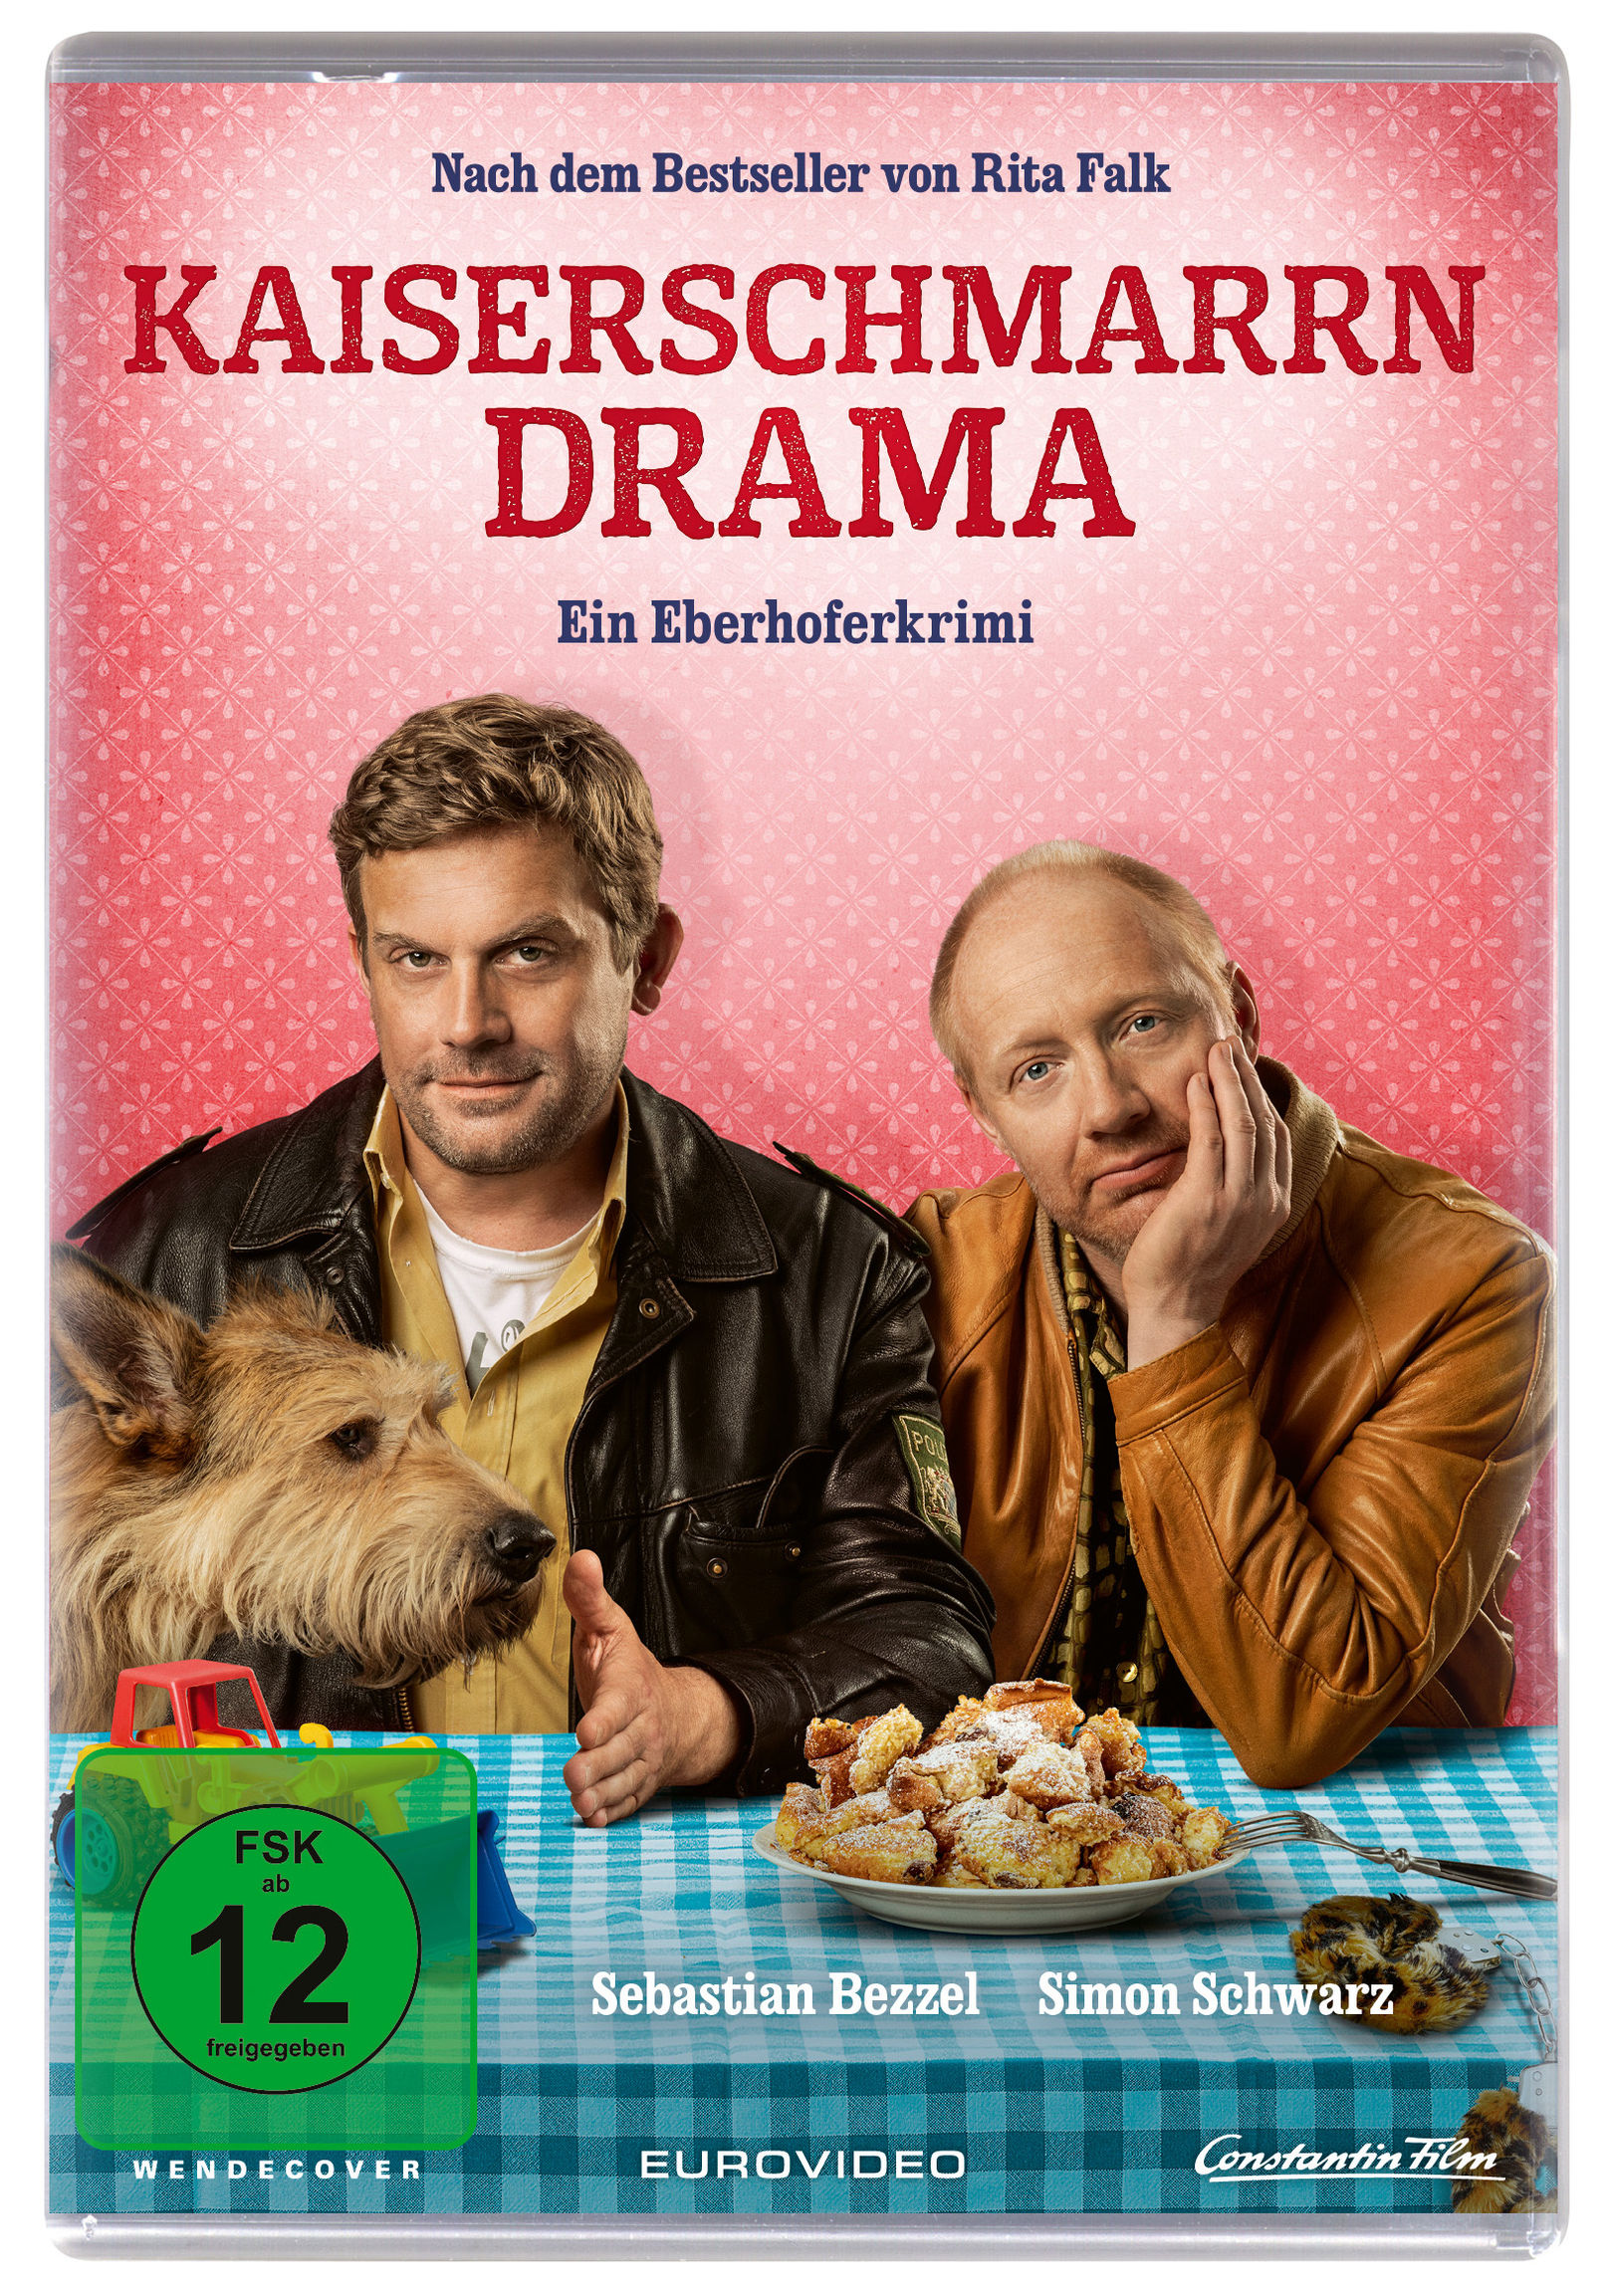 Kaiserschmarrndrama DVD jetzt bei Weltbild.de online bestellen